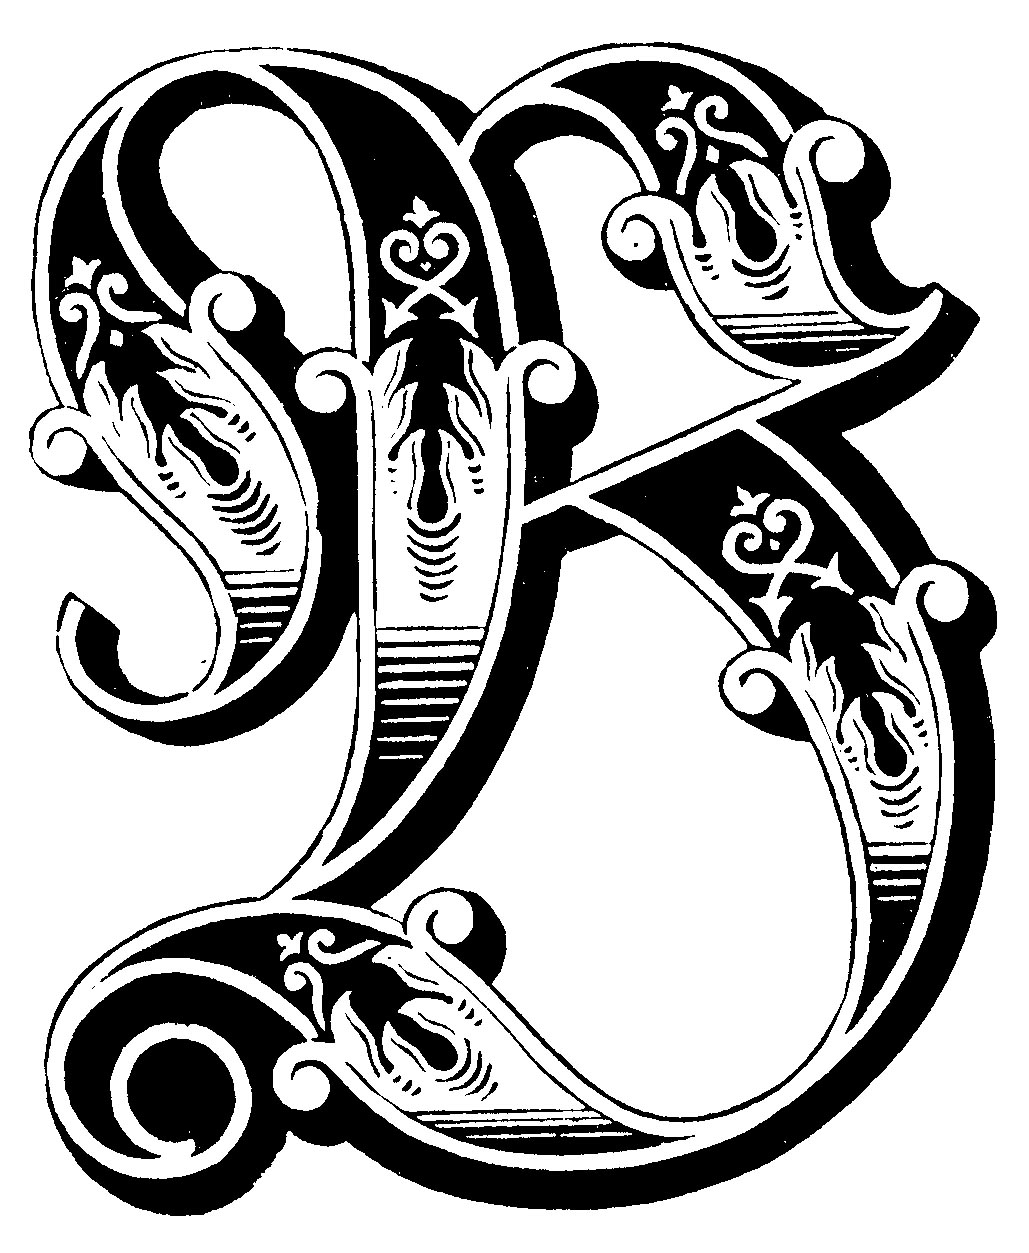 Fancy Letter D Designs | Marihukubun